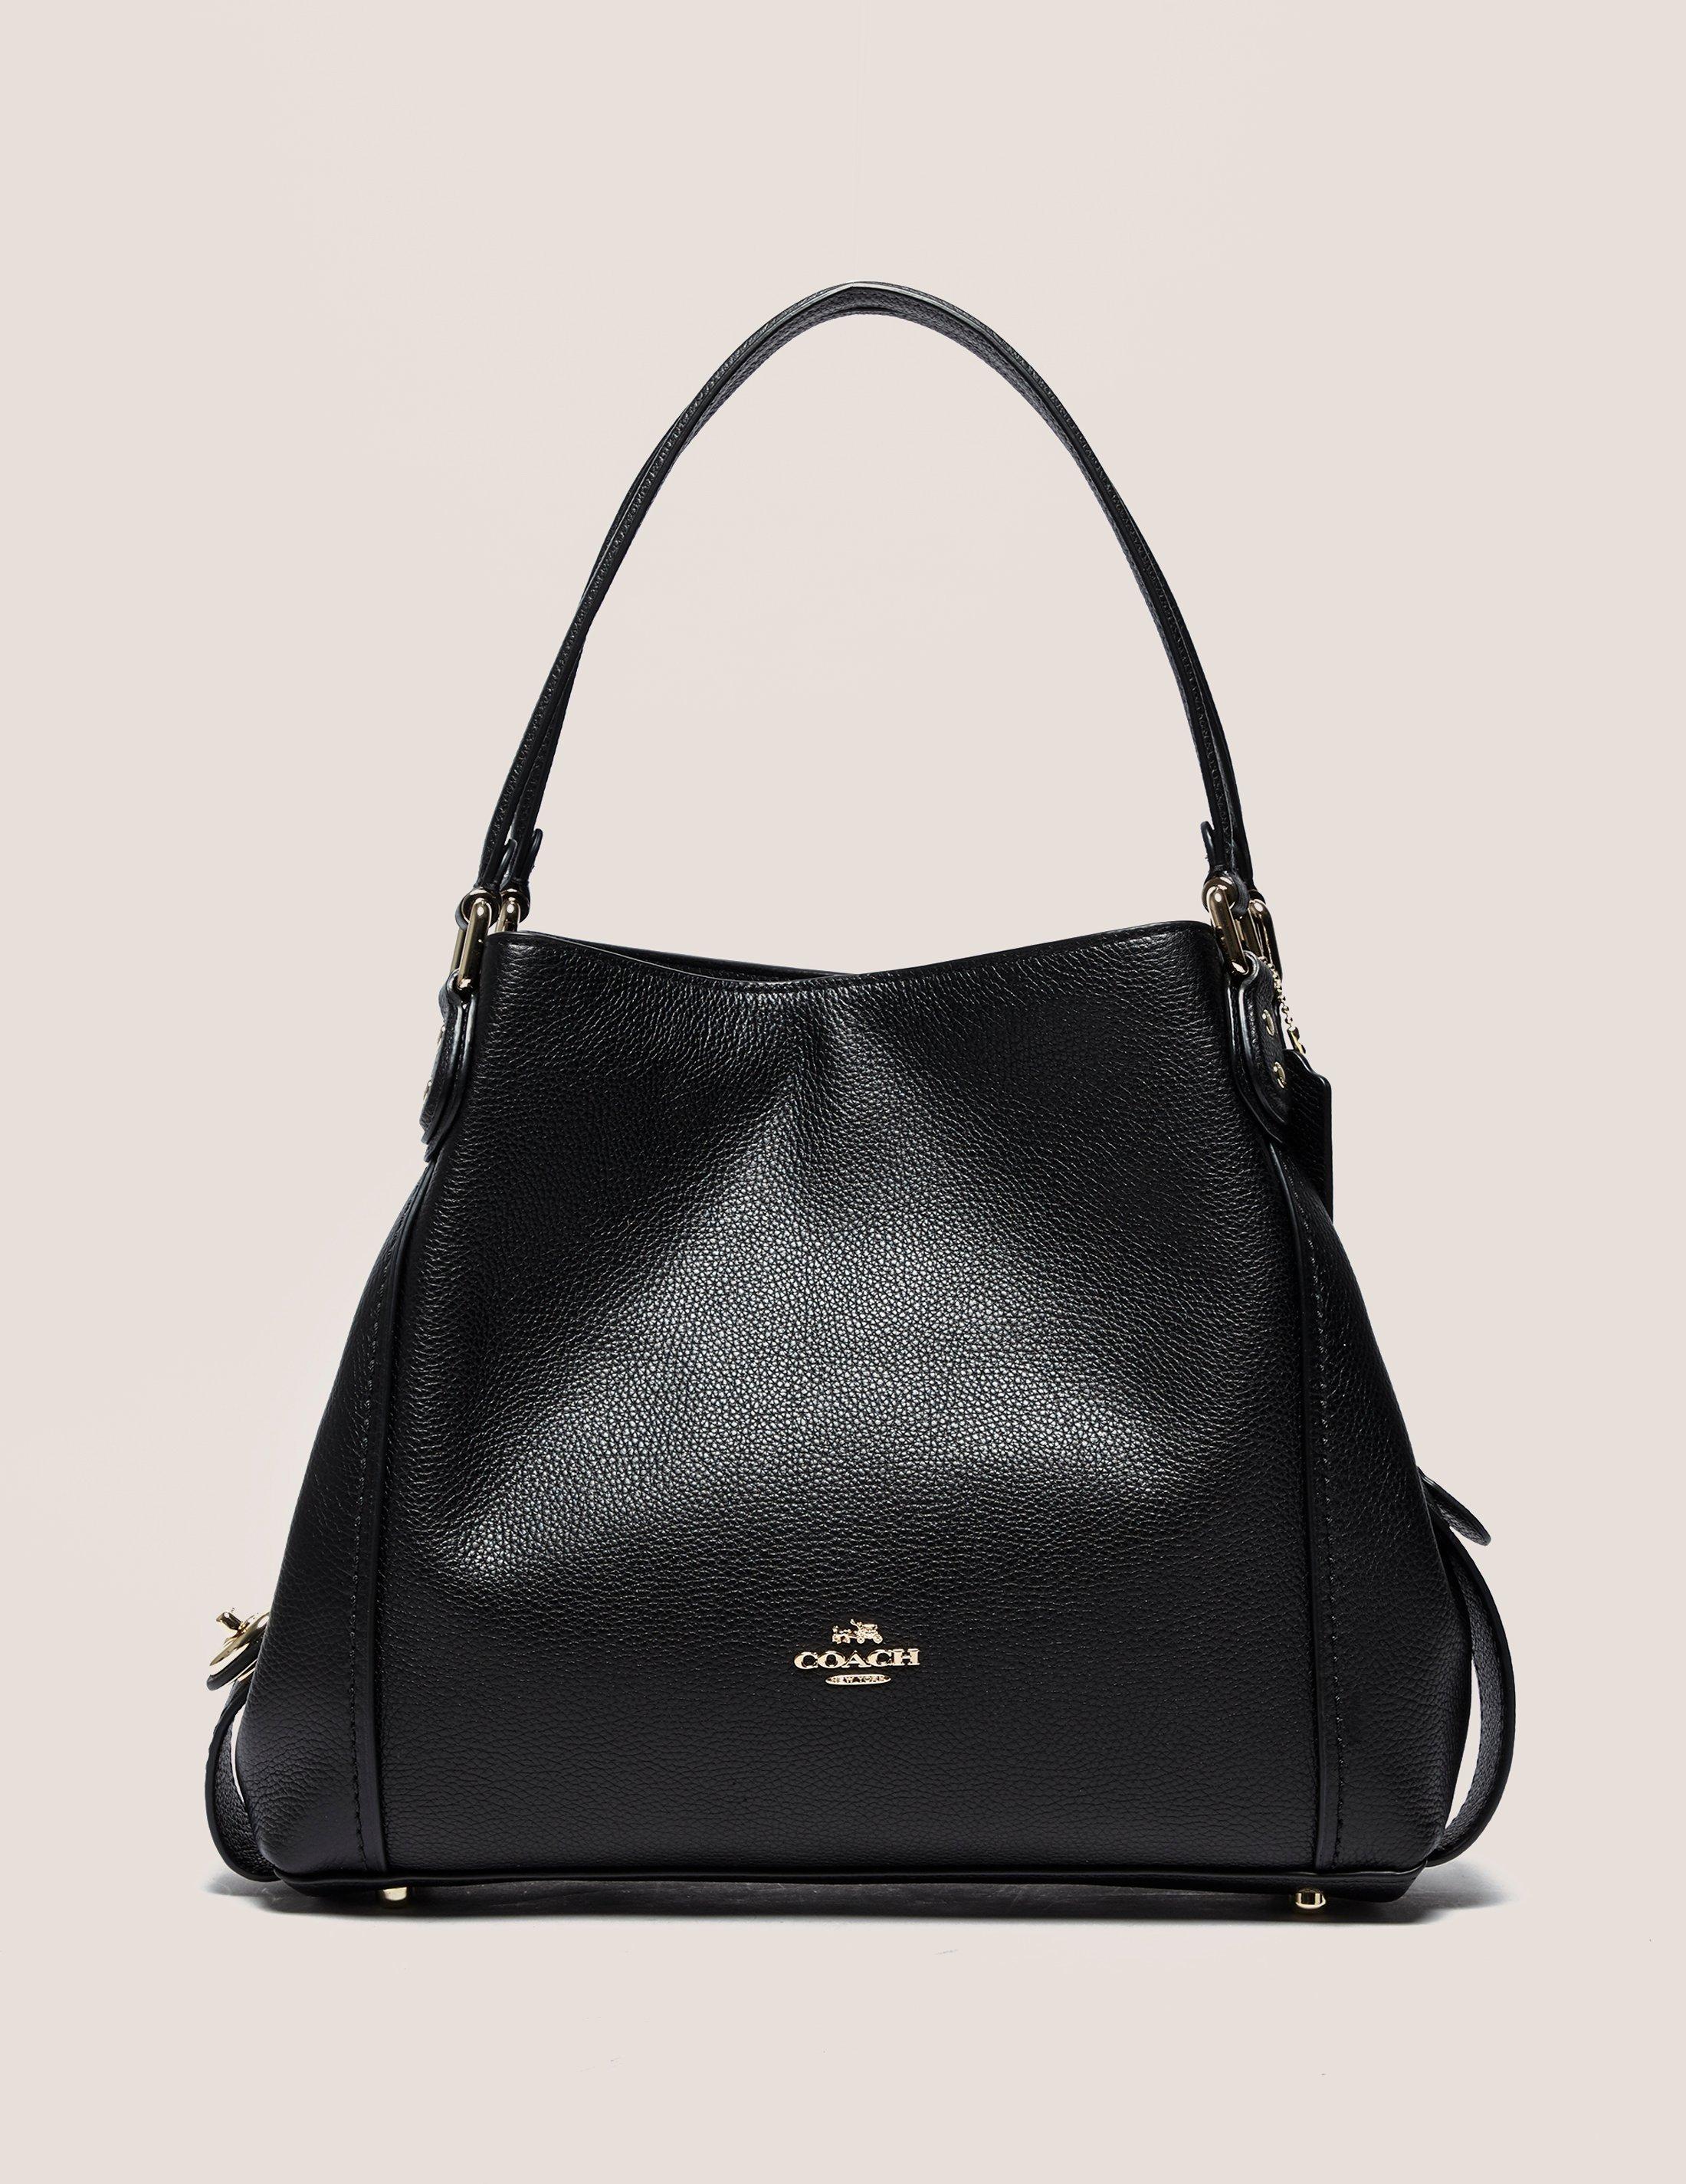 COACH Leather Edie 31 Shoulder Bag in Black - Lyst